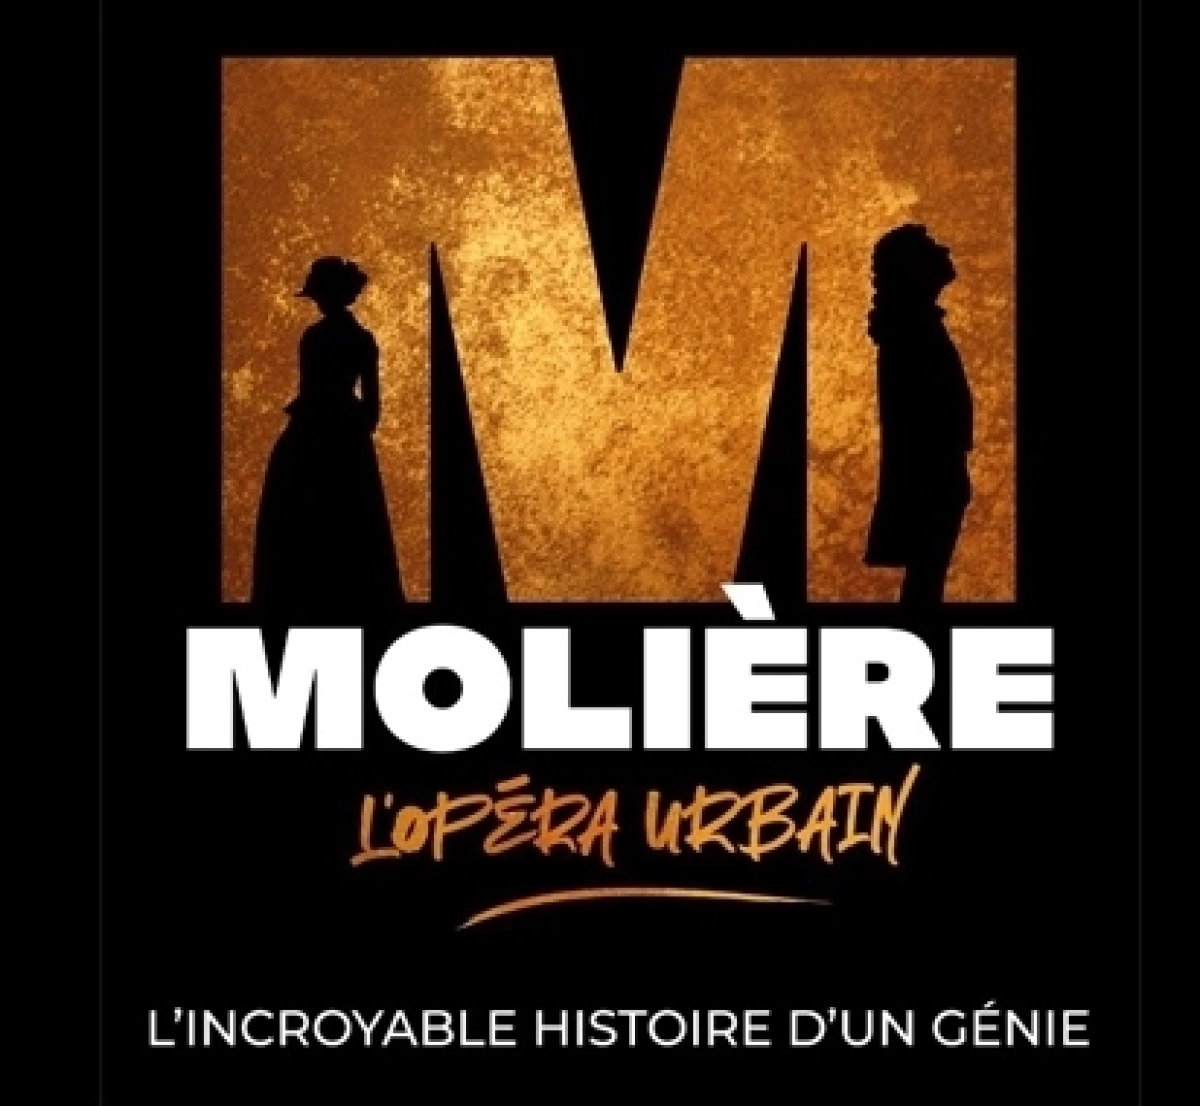 Moliere L'opera Urbain at Zenith Strasbourg Tickets